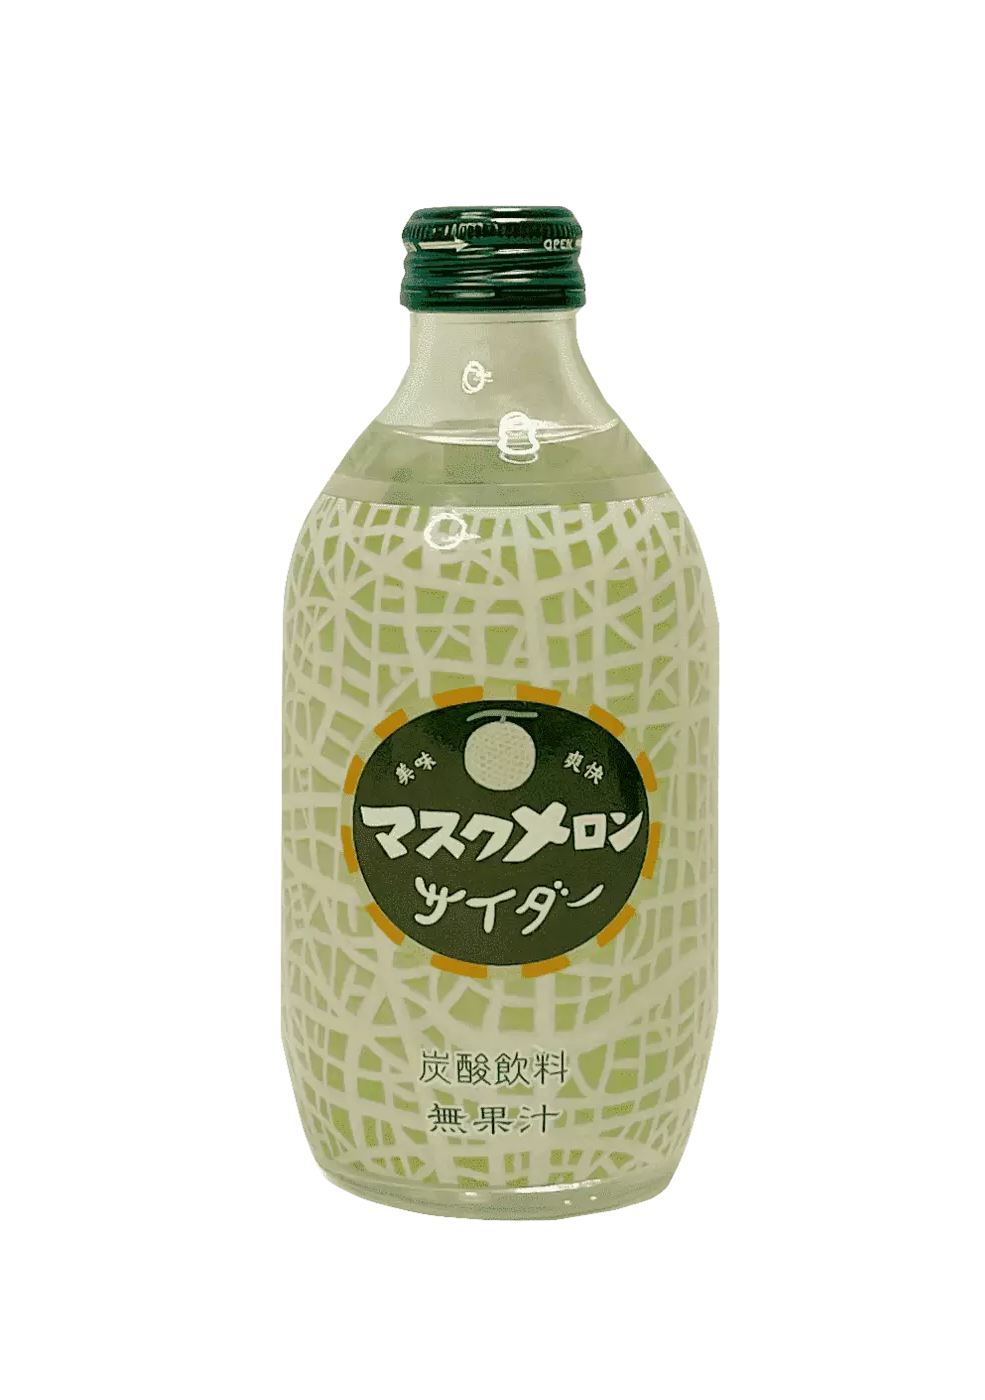 Muskmelon Cider 300ml Tomomasu Japan